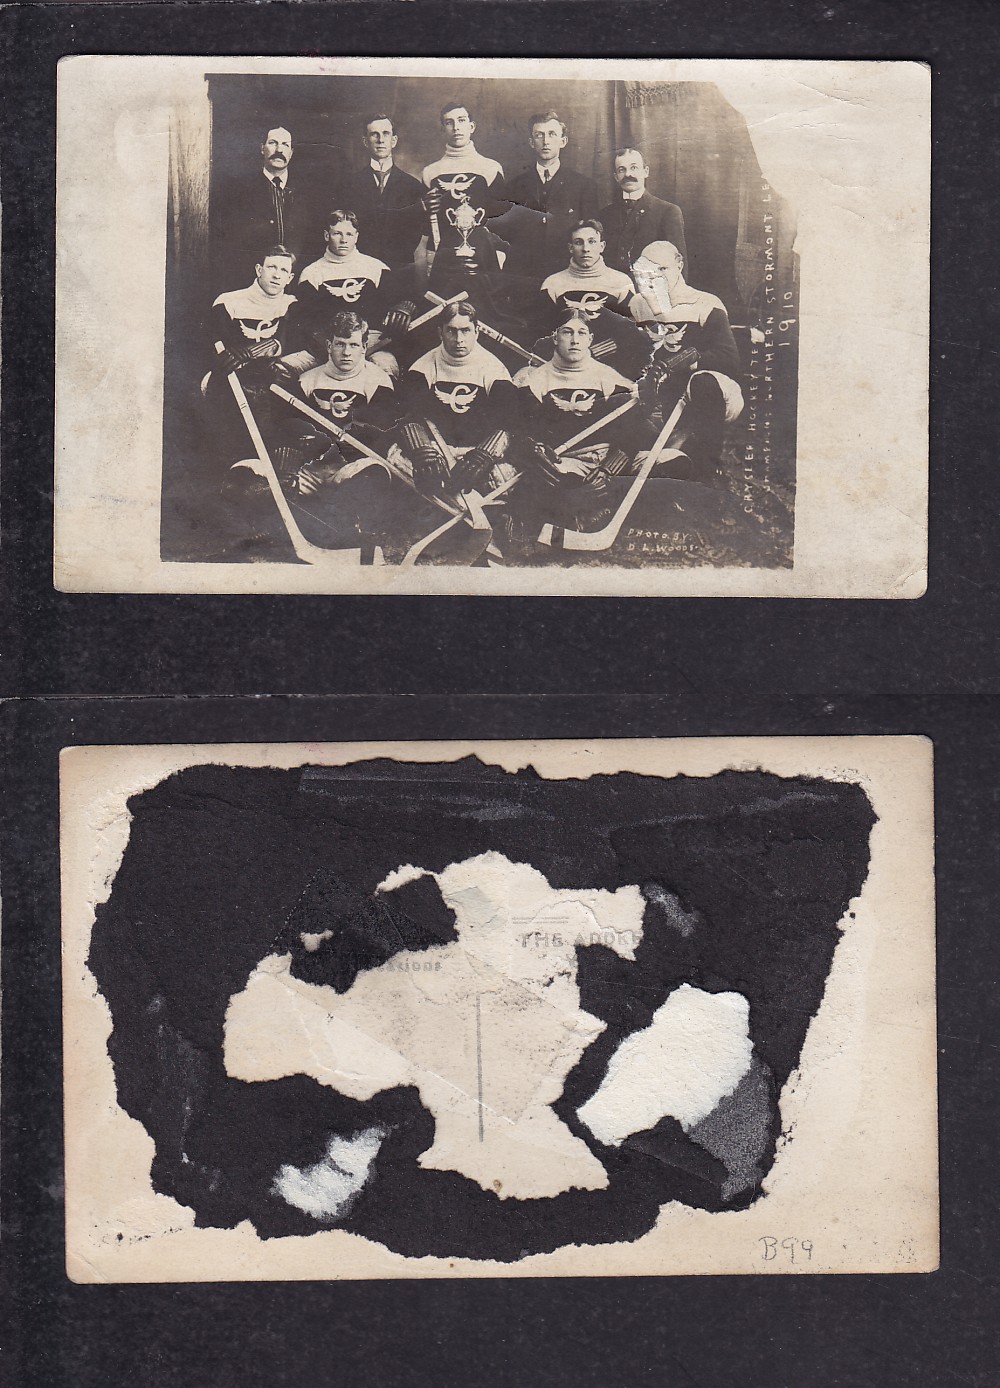 1910 HOCKEY TEAM POST CARD photo